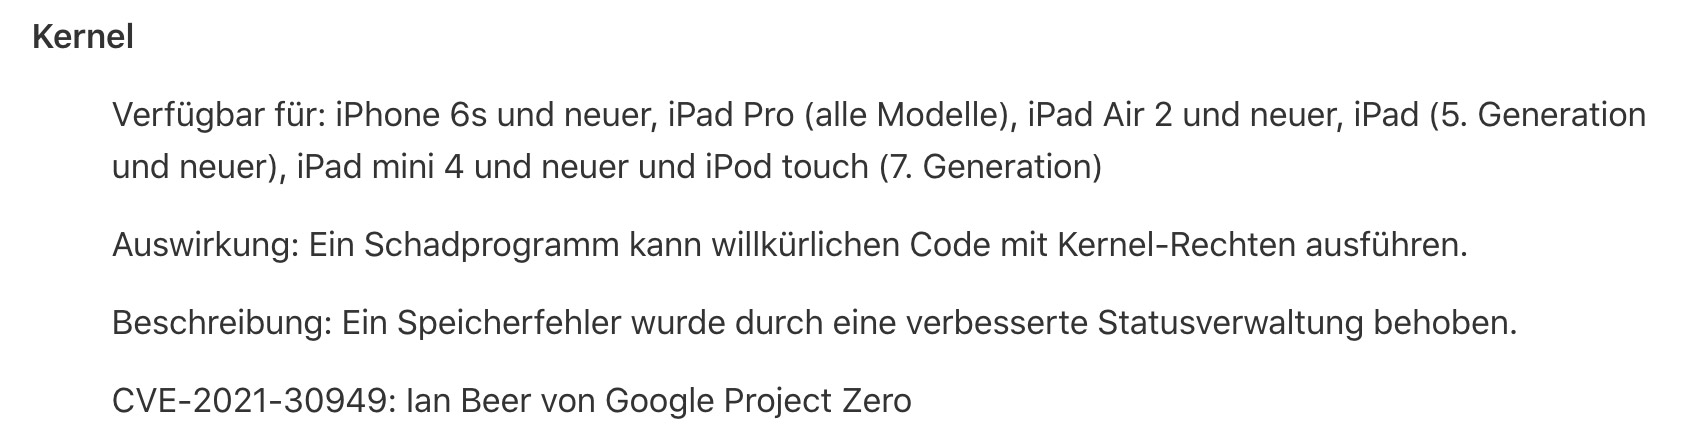 Ausschnitt aus dem iOS 15.2 Changelog vom Kernel, iOS 15.1 Jailbreak Status, Fabian Geissler, Hack4Life, Ian Beer iOS 15 Jailbreak